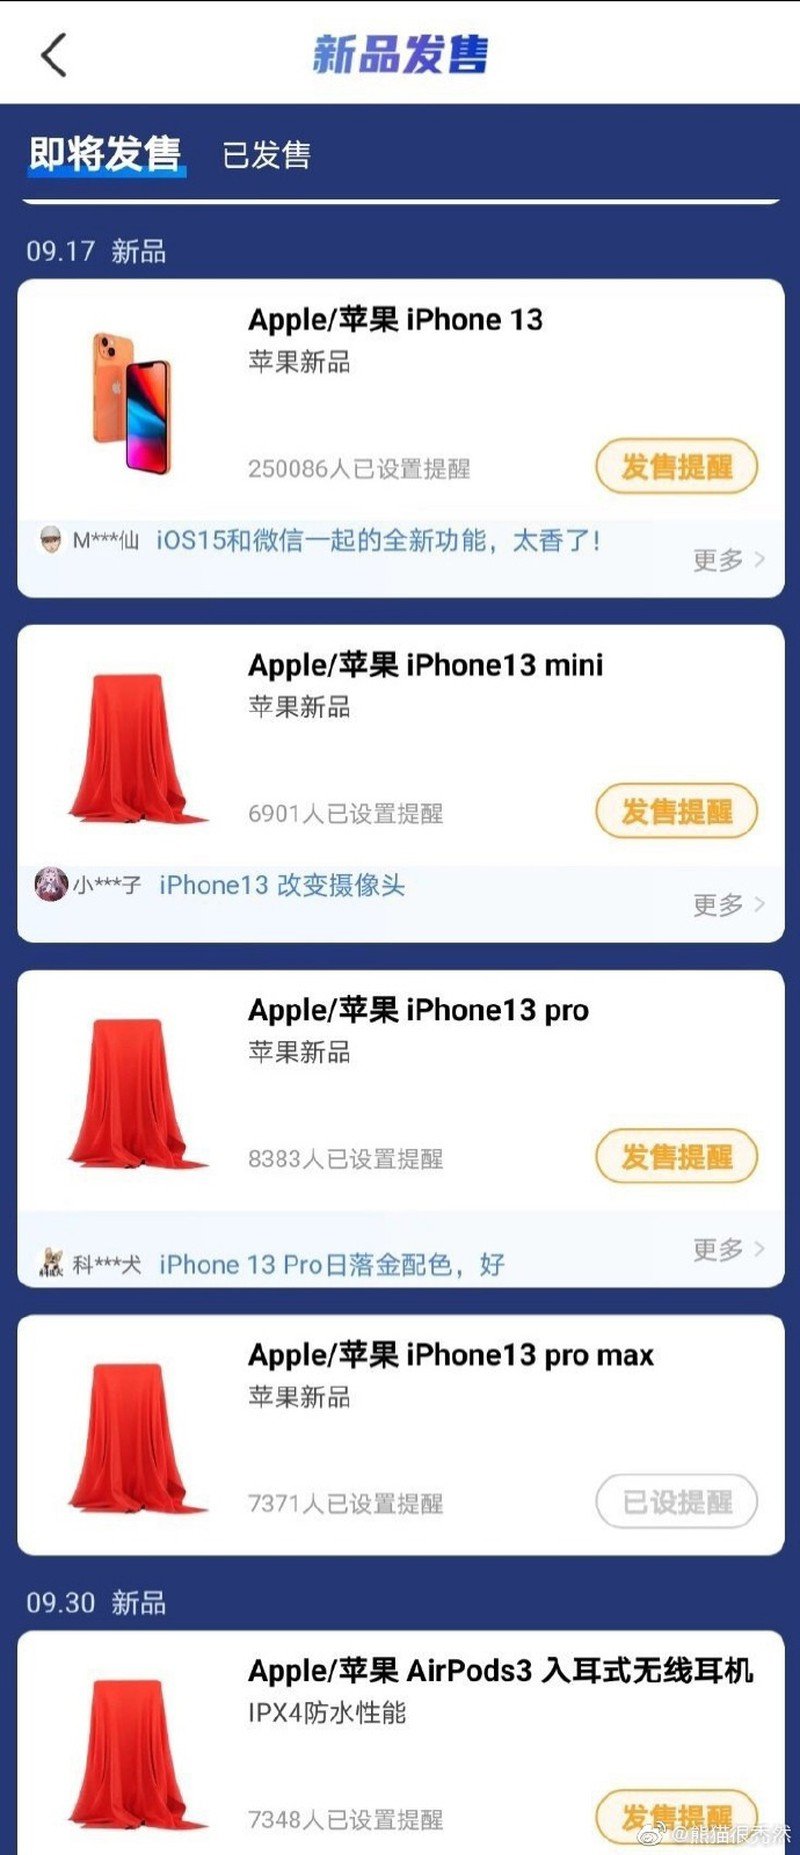 , iPhone 13: Ανακοινώνονται 7 Σεπτεμβρίου, κυκλοφορούν στις 17